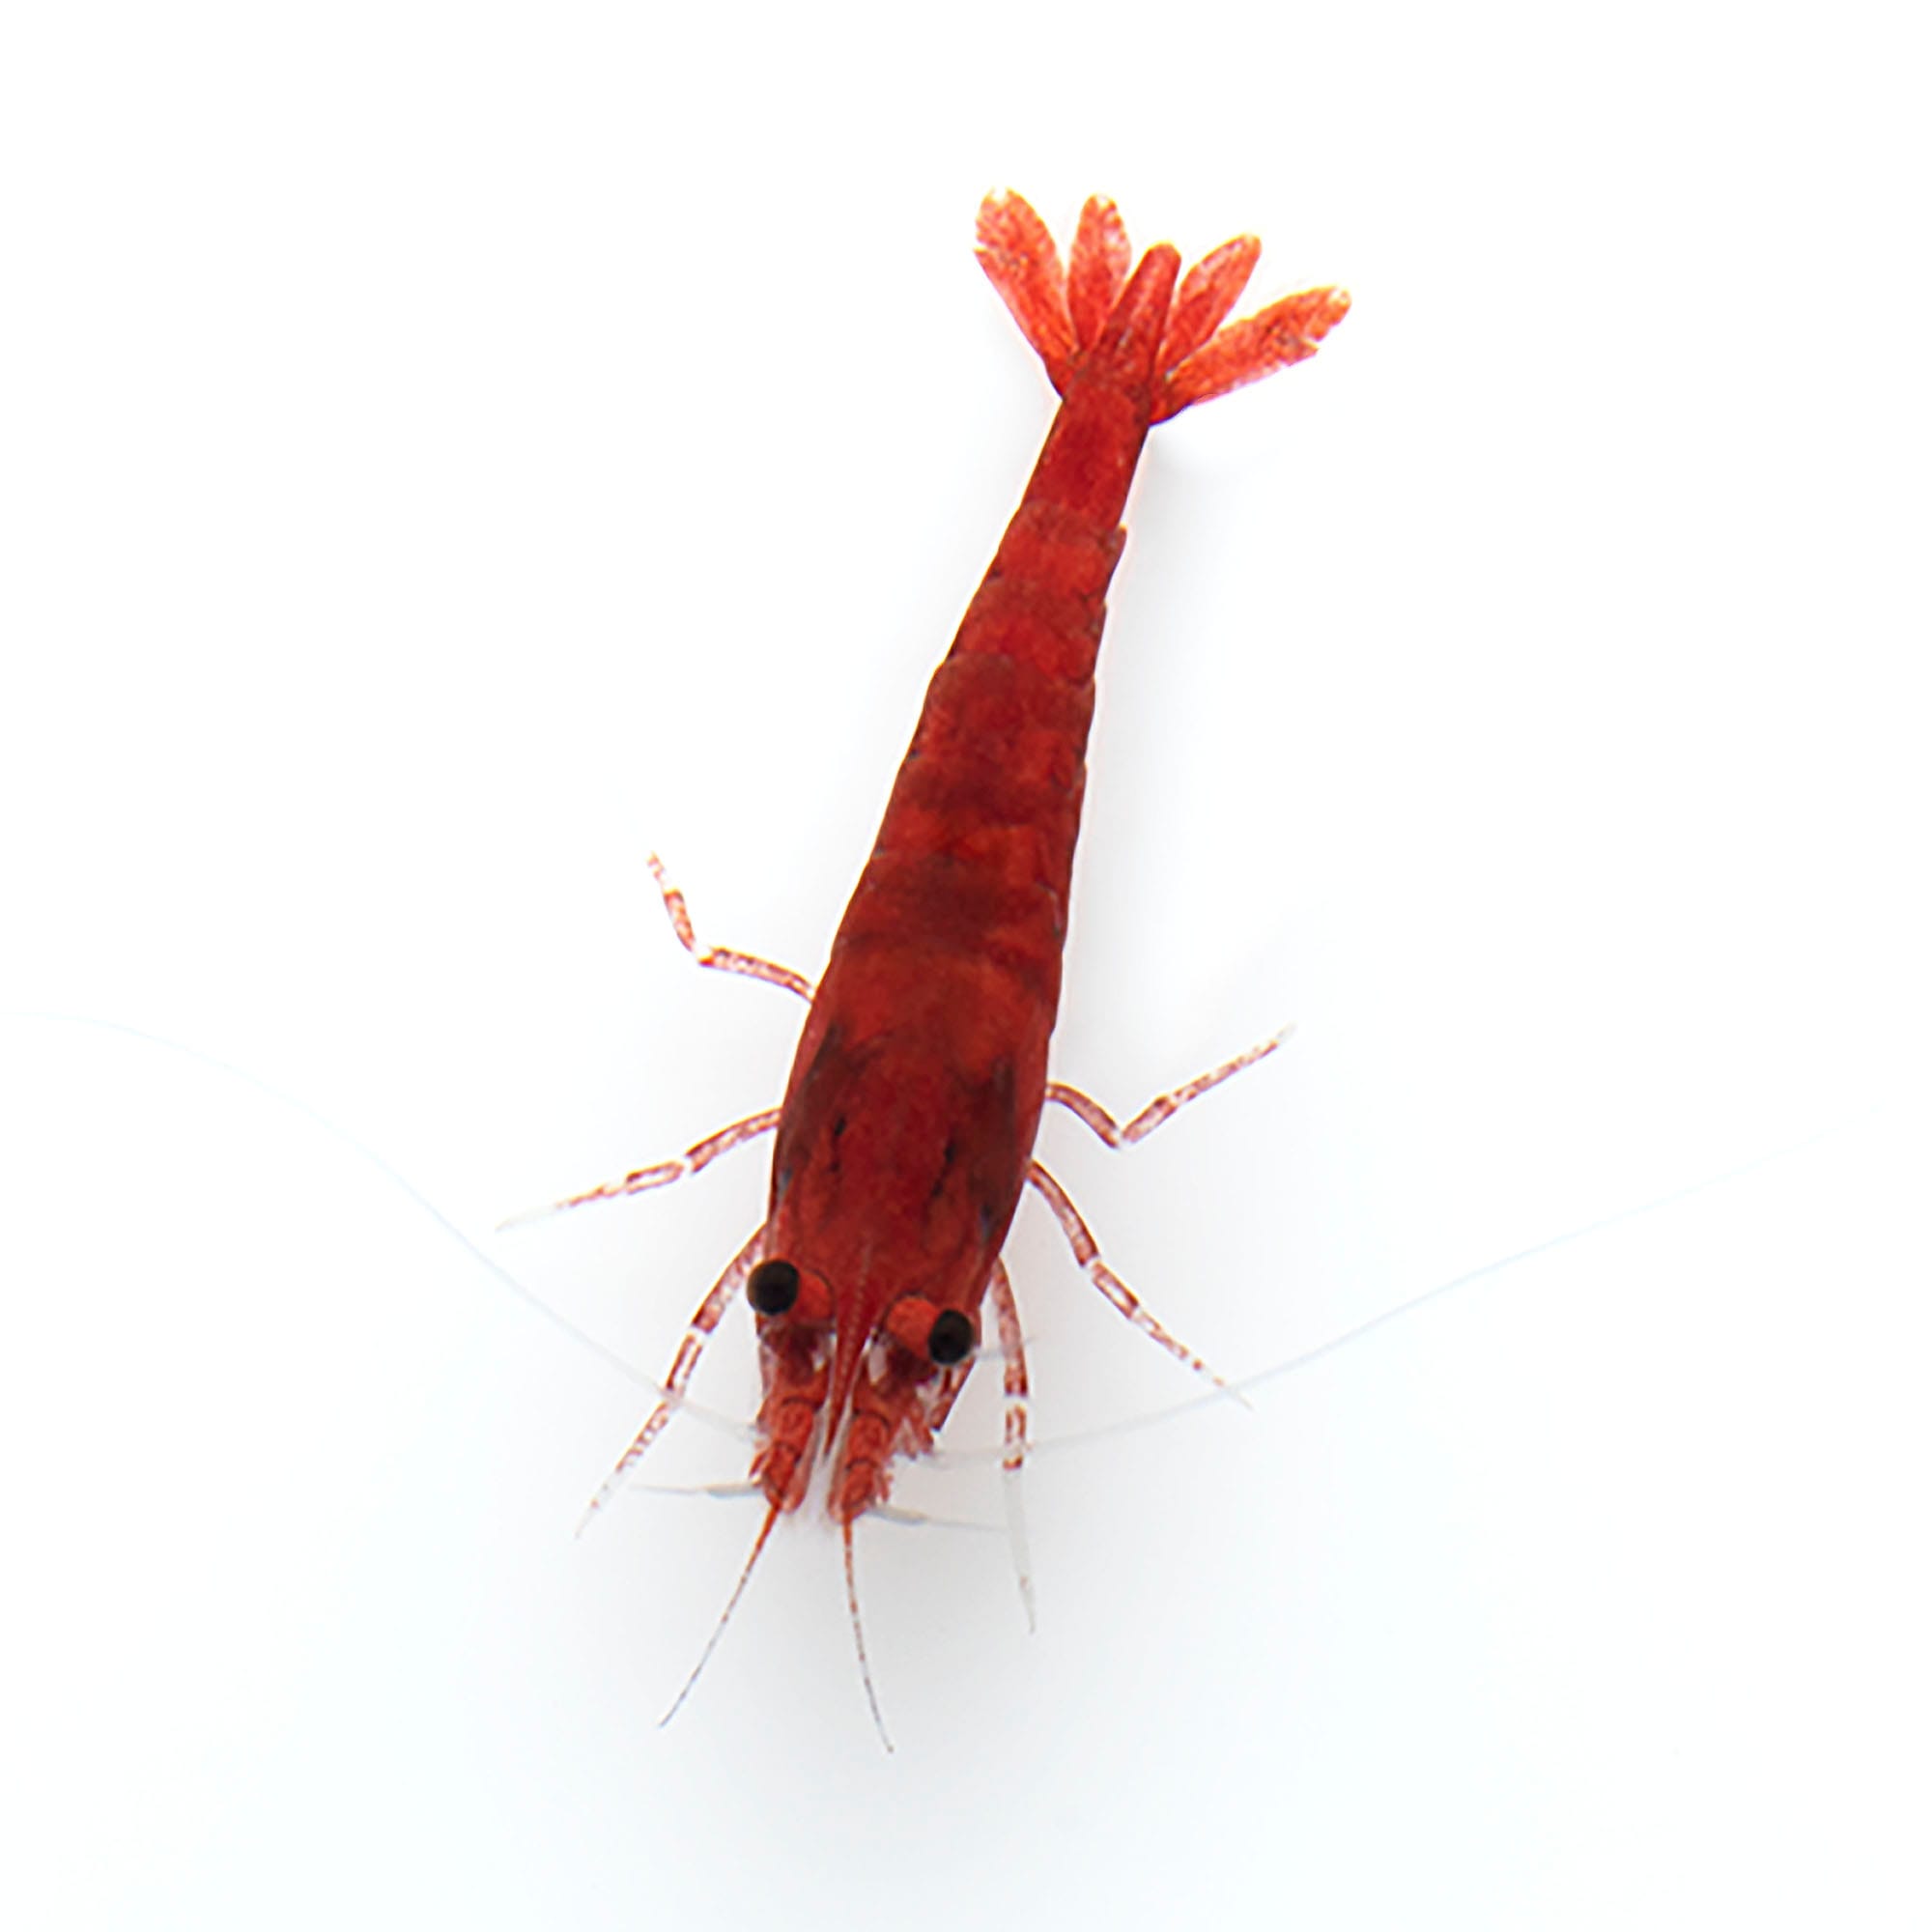 Filtre Aquarium - Access Shrimps - Le Crevettilus